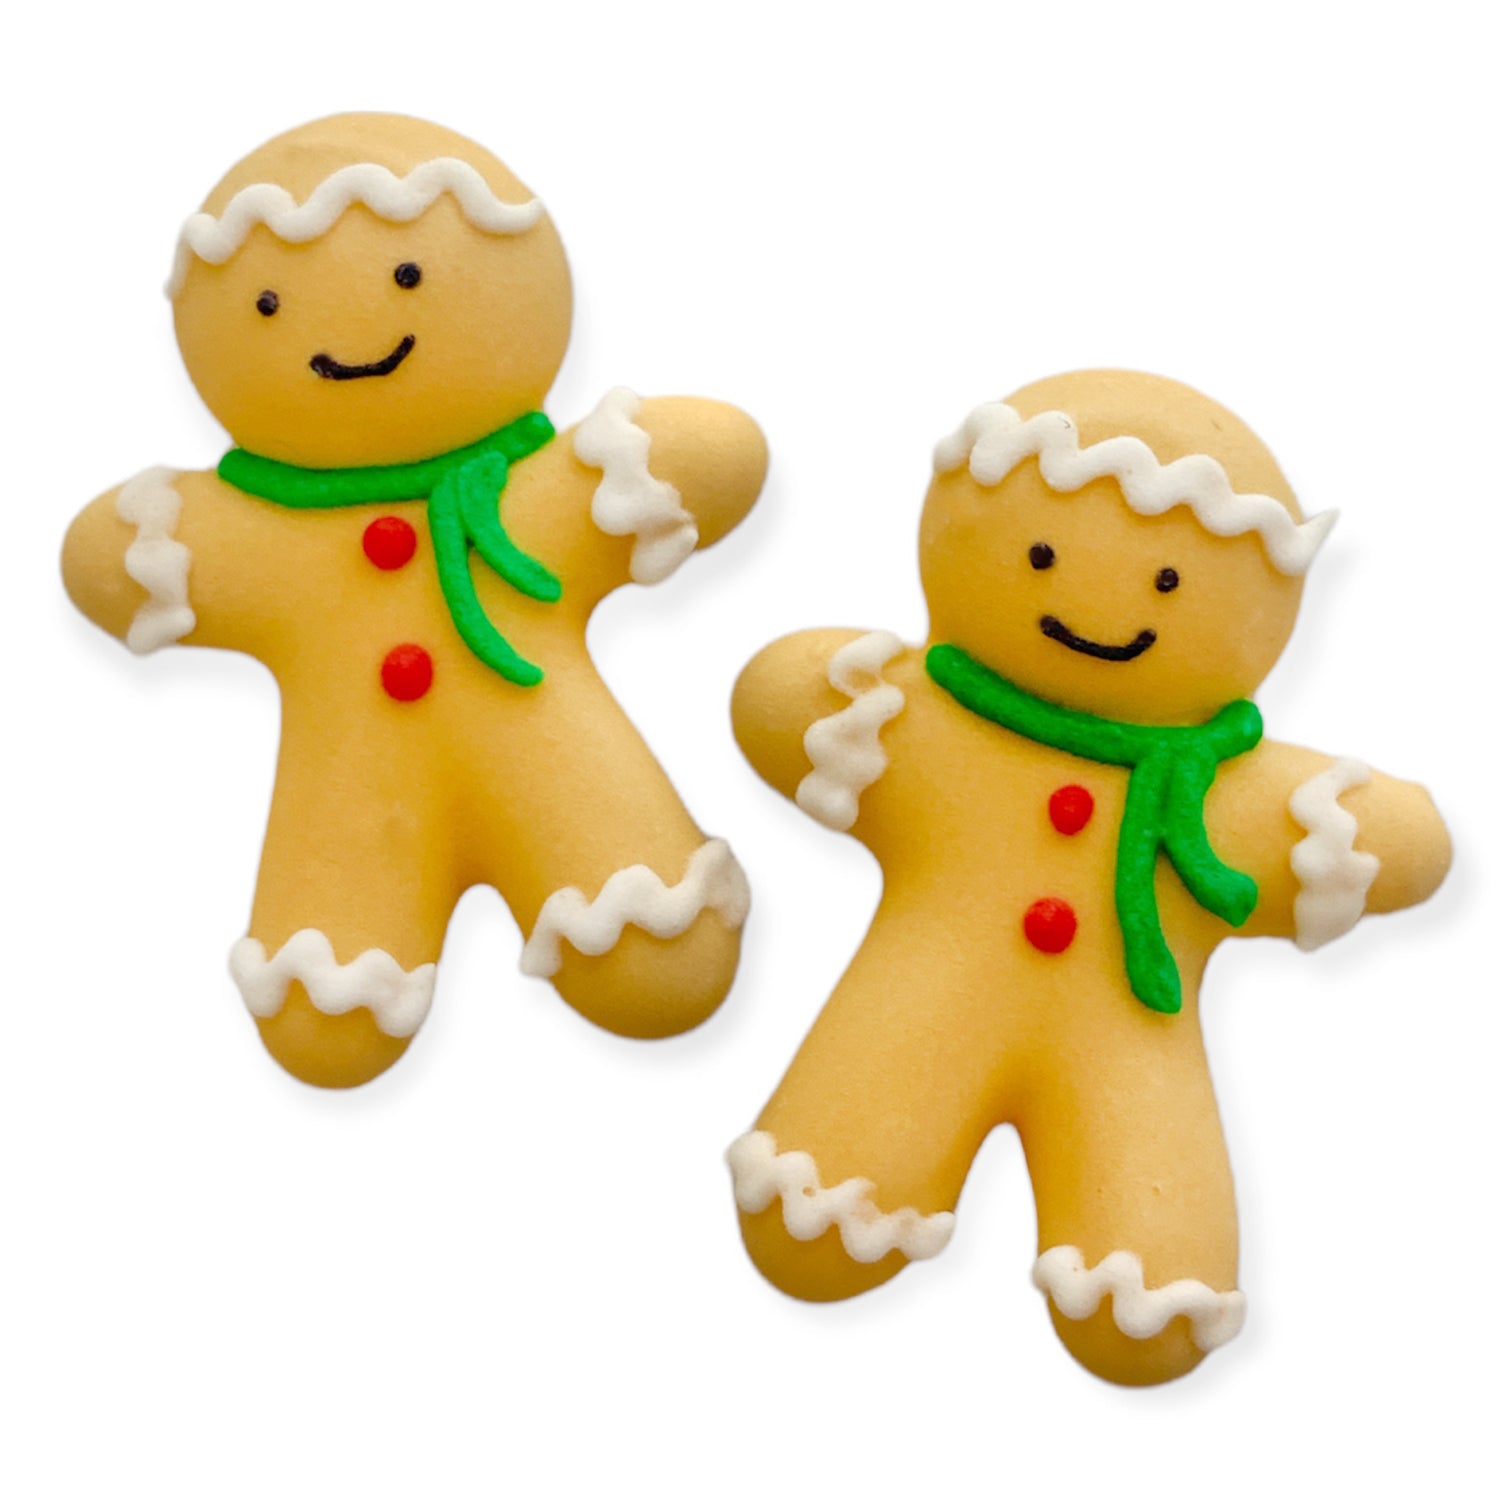 Snowman, Christmas Tree, & Gingerbread Boy Cookie Sheet